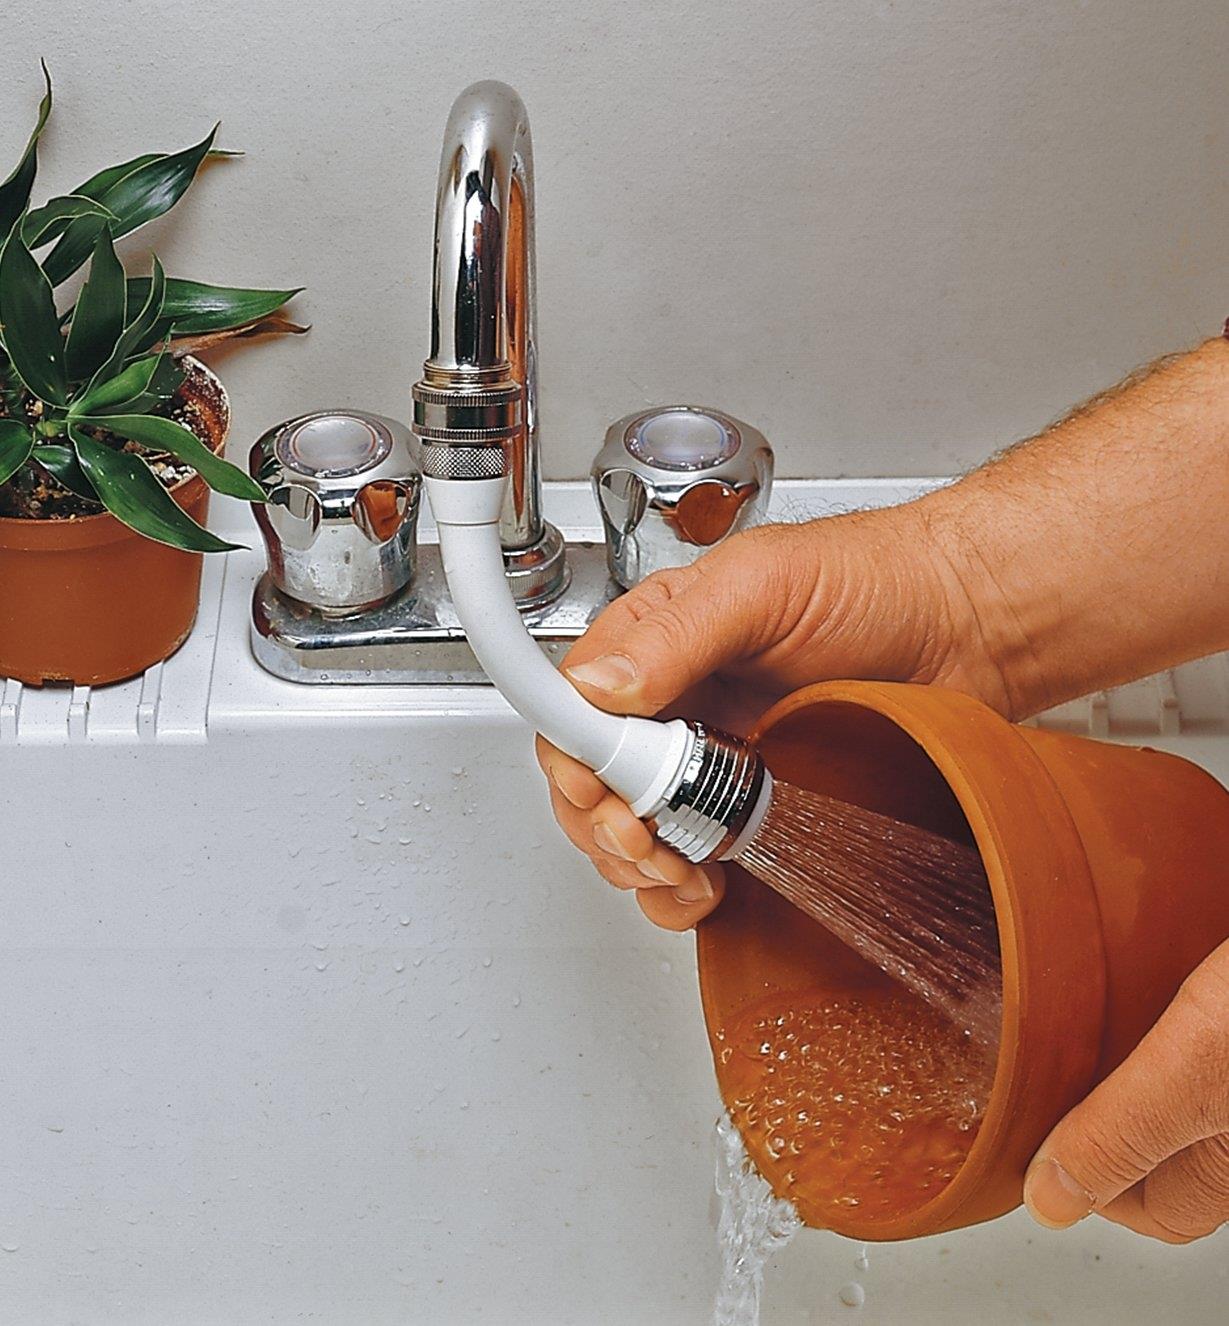 Rinsing a plant pot using the Flexible-Neck Sprayer